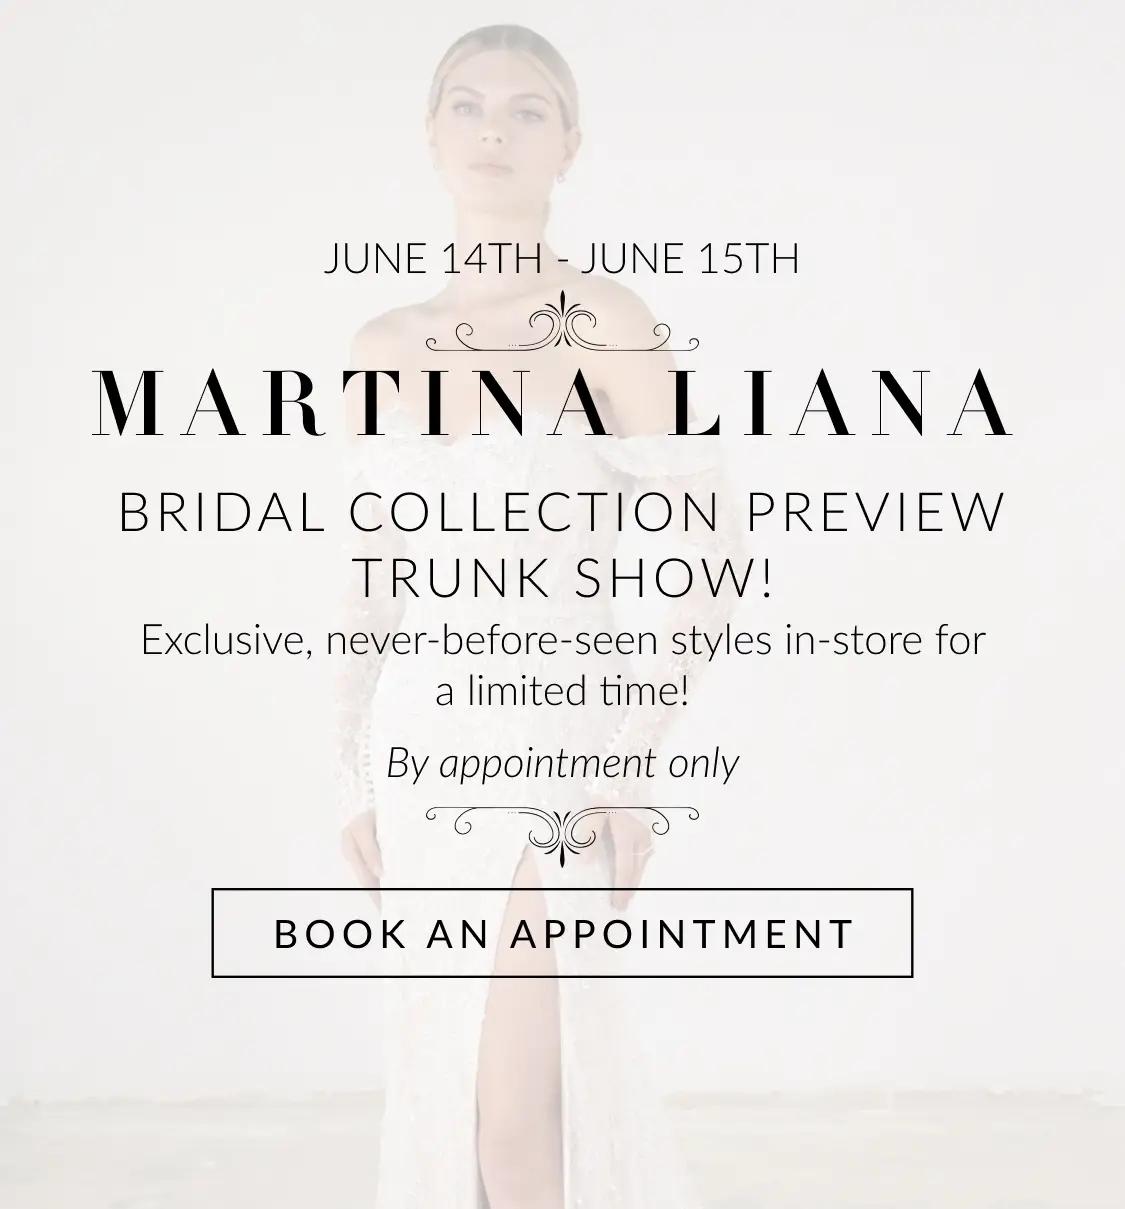 Mobile Martina Liana Trunk Show Banner